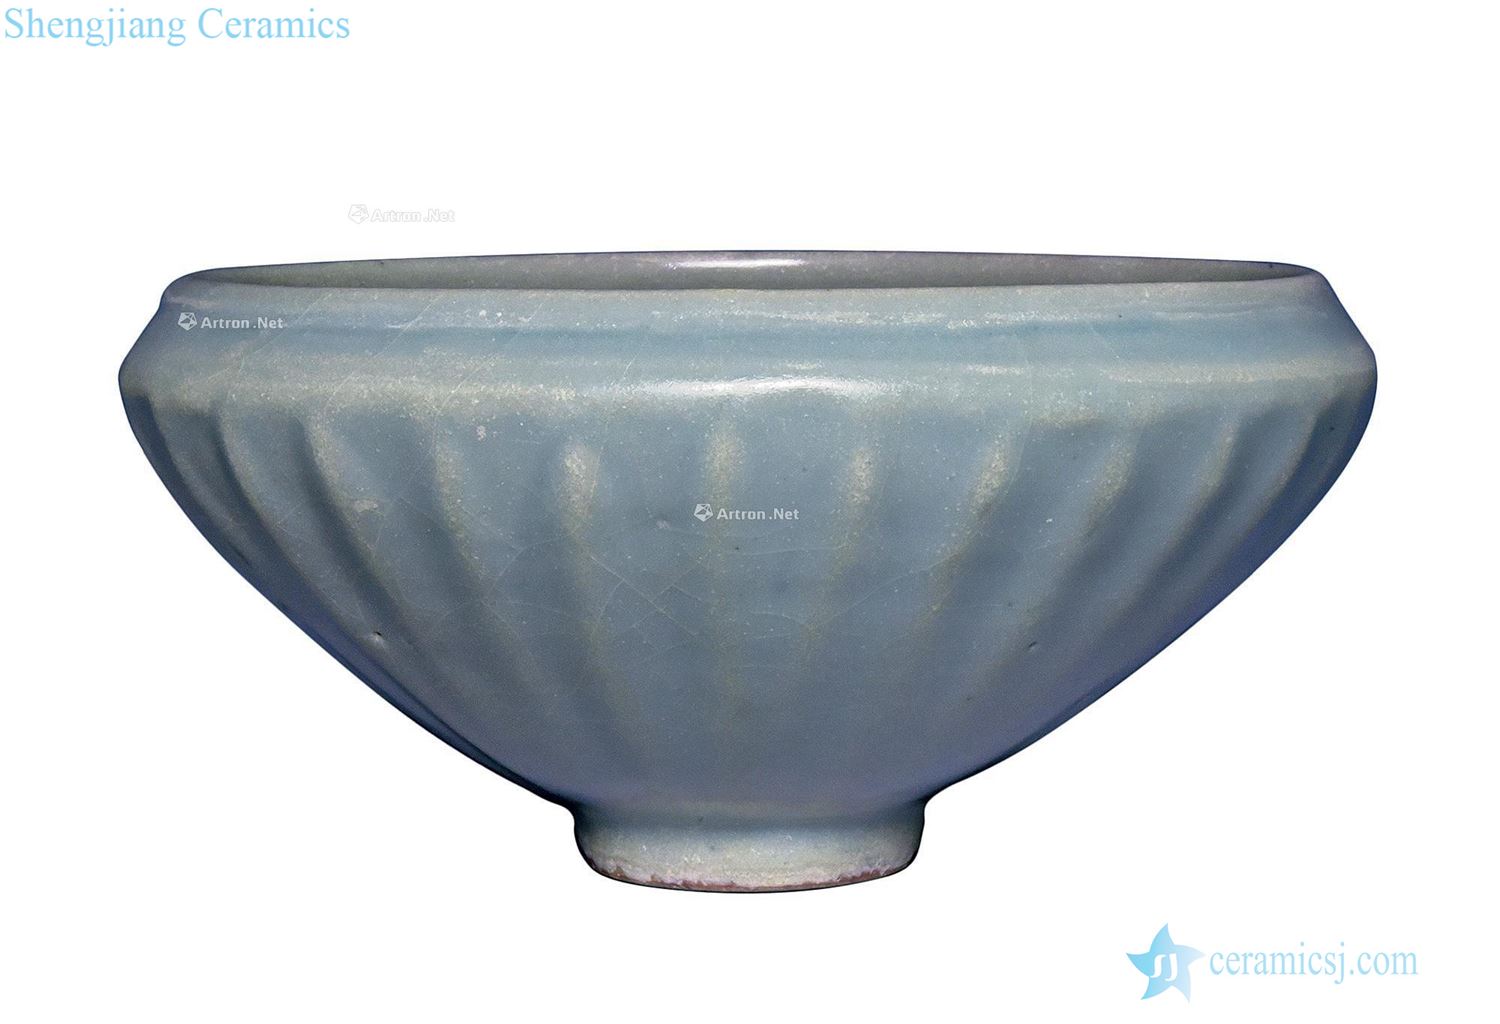 The southern song dynasty Longquan celadon powder blue glaze lotus-shaped bowl